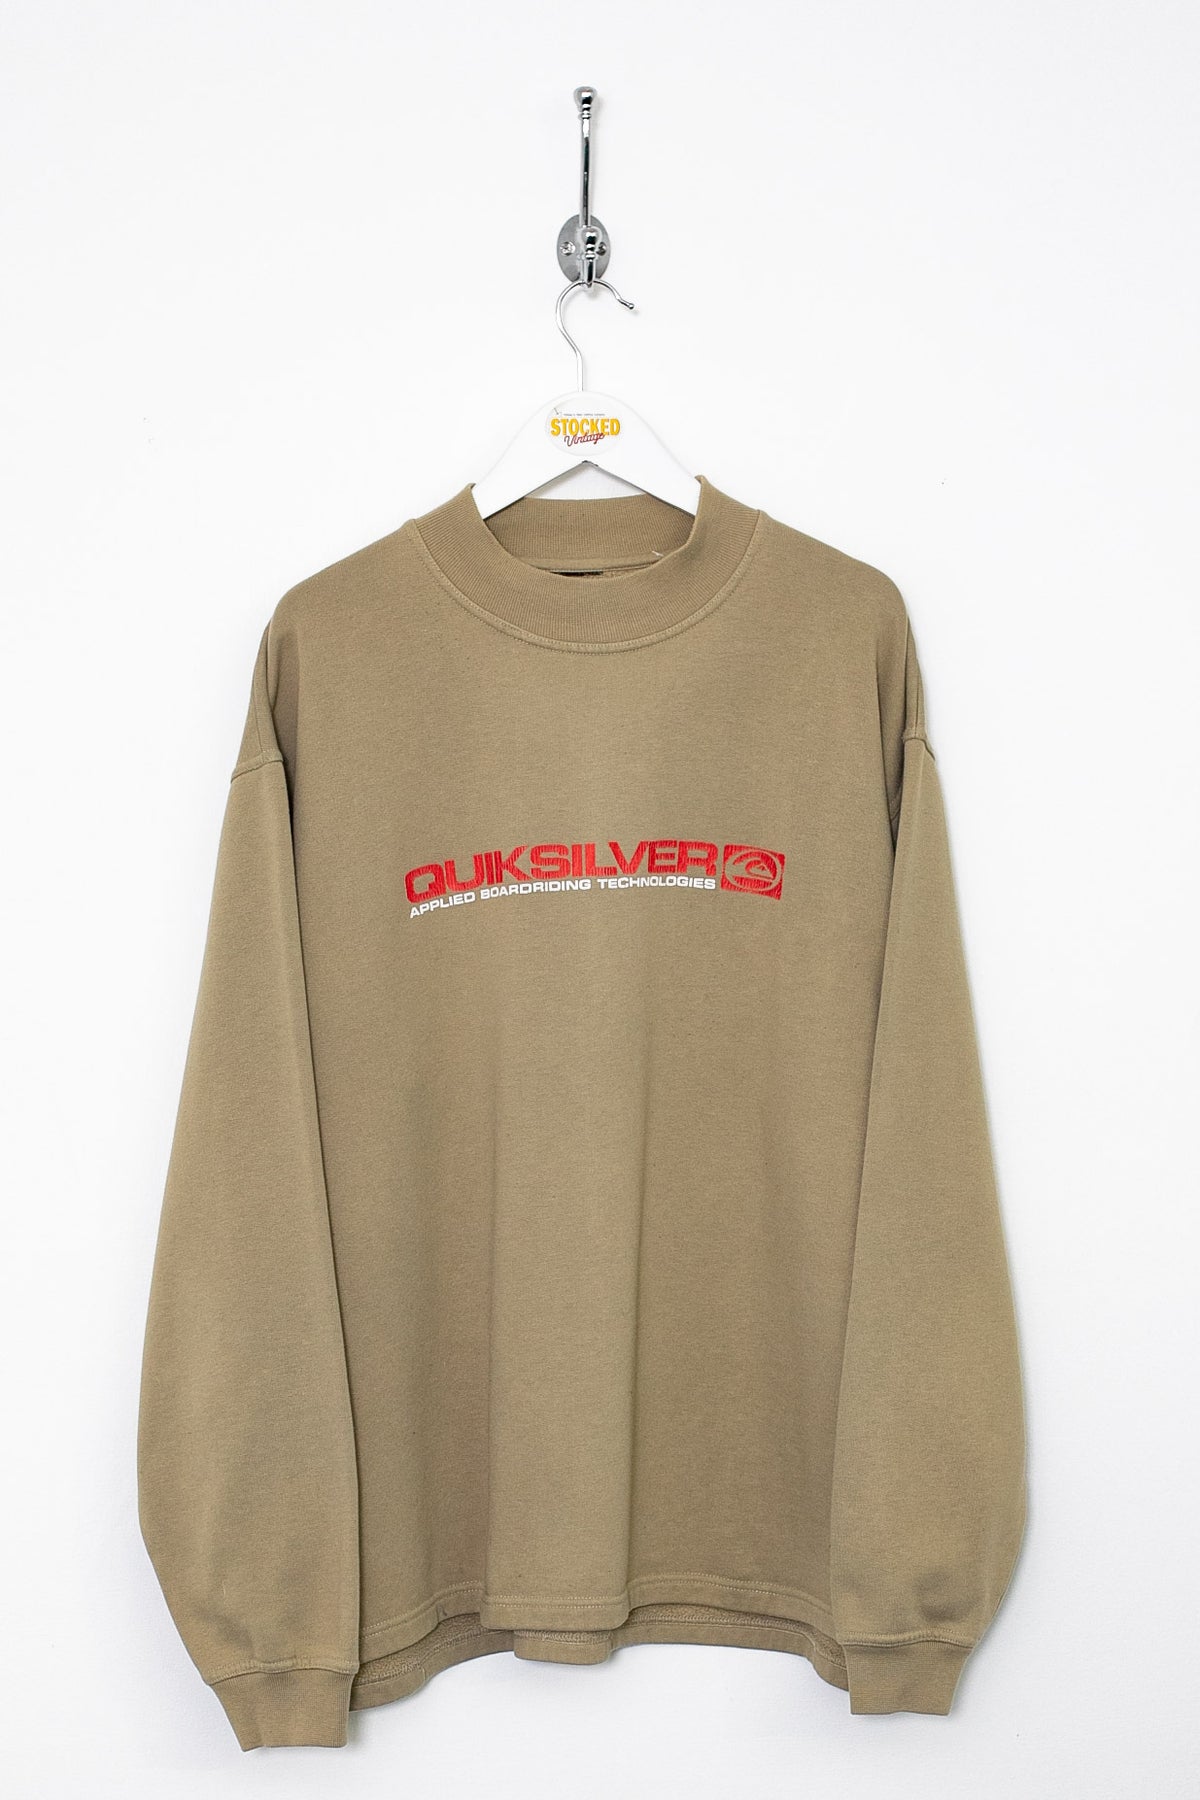 00s Quicksilver Sweatshirt (L)